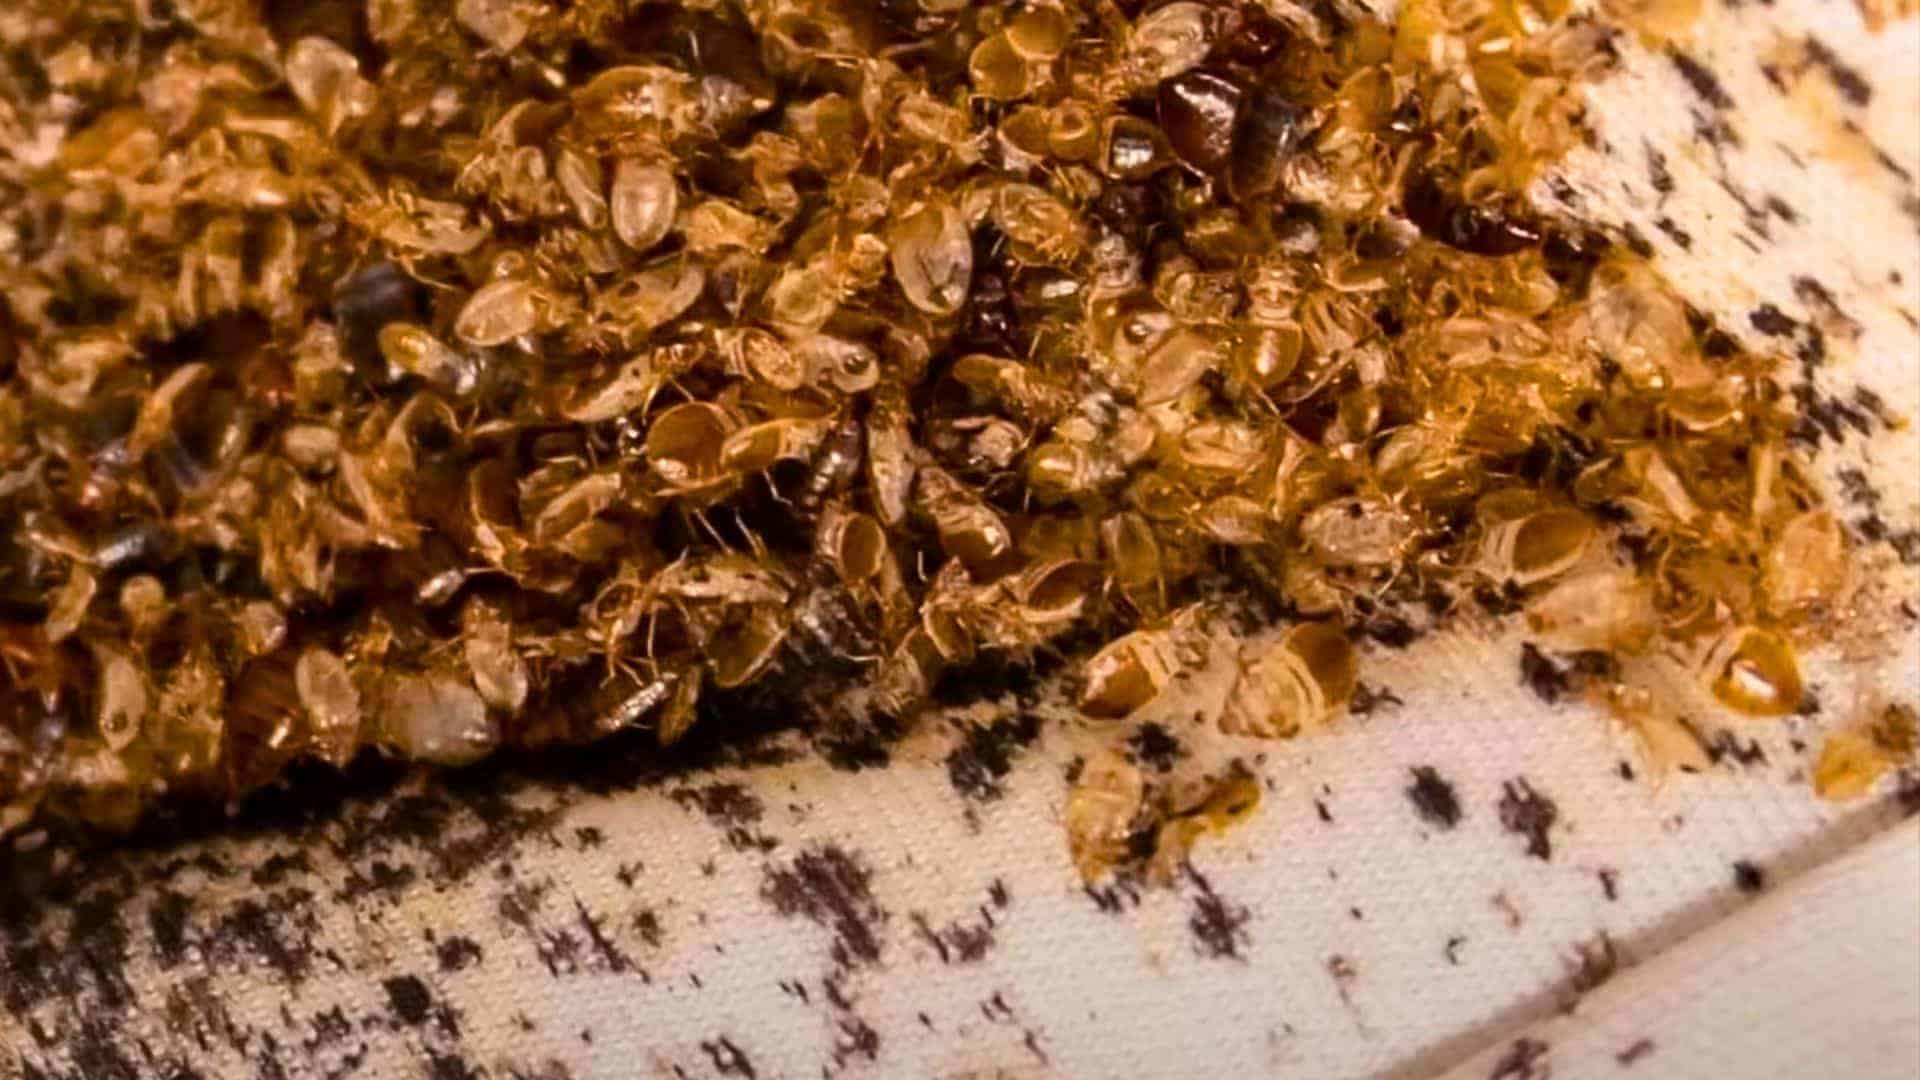 arizona woman battles bed bug infestation